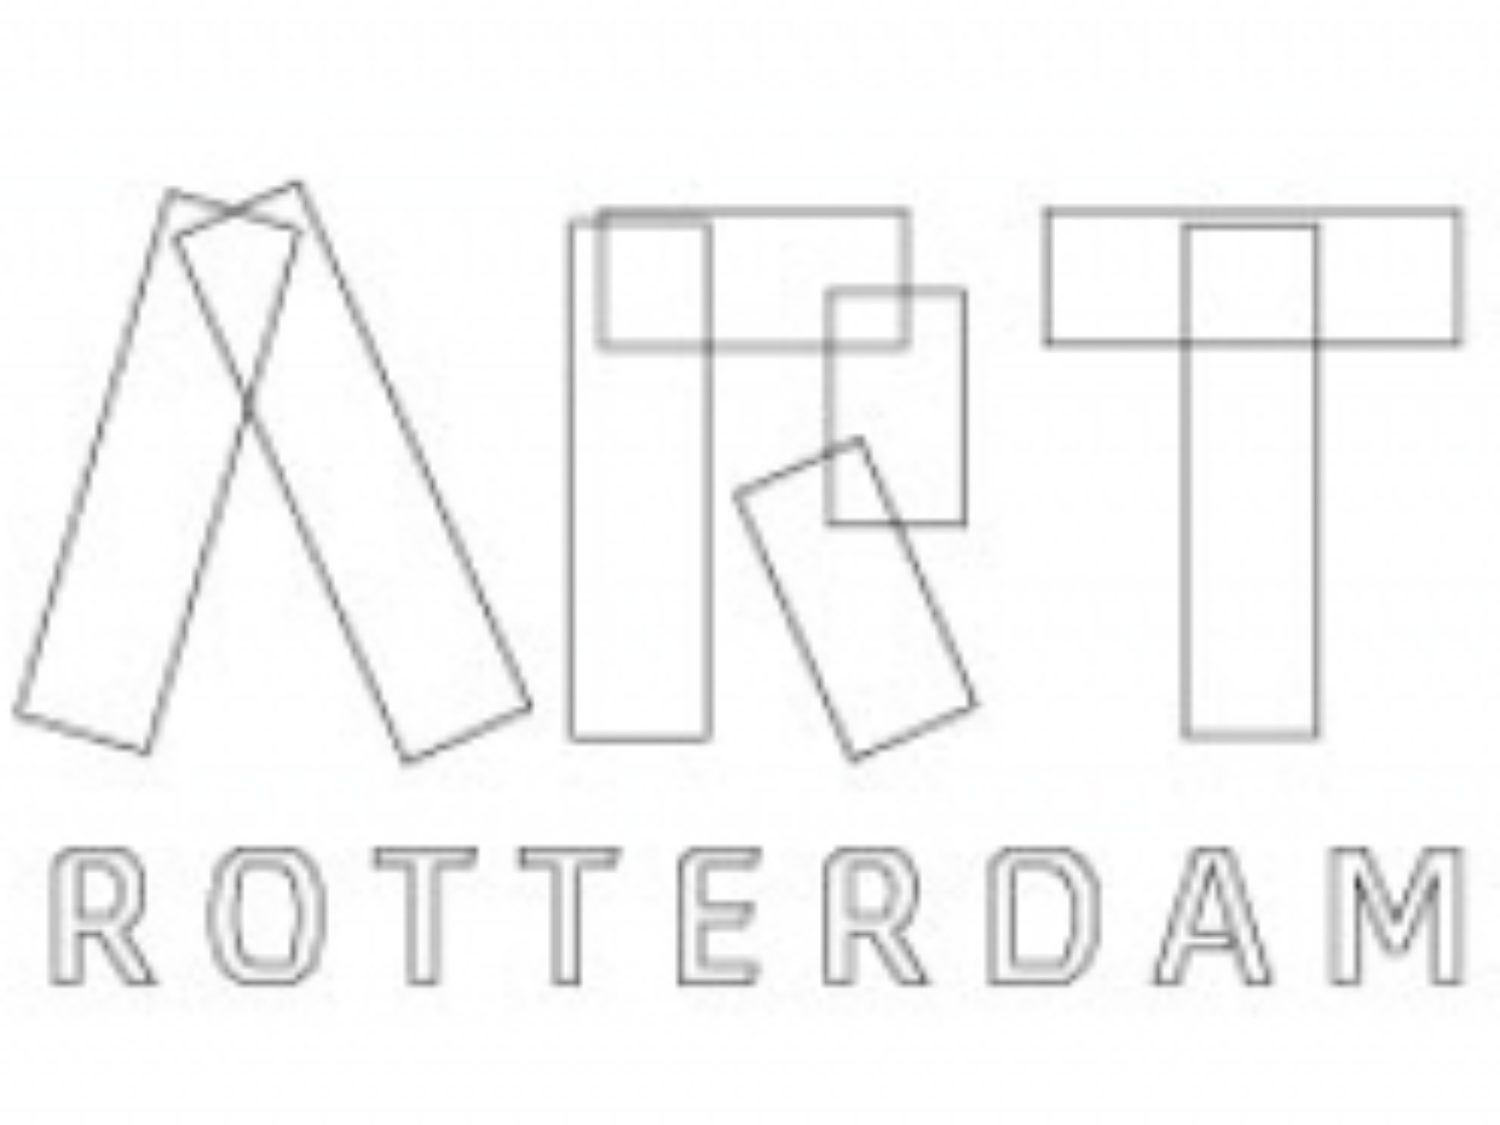 TENT during Art Rotterdam